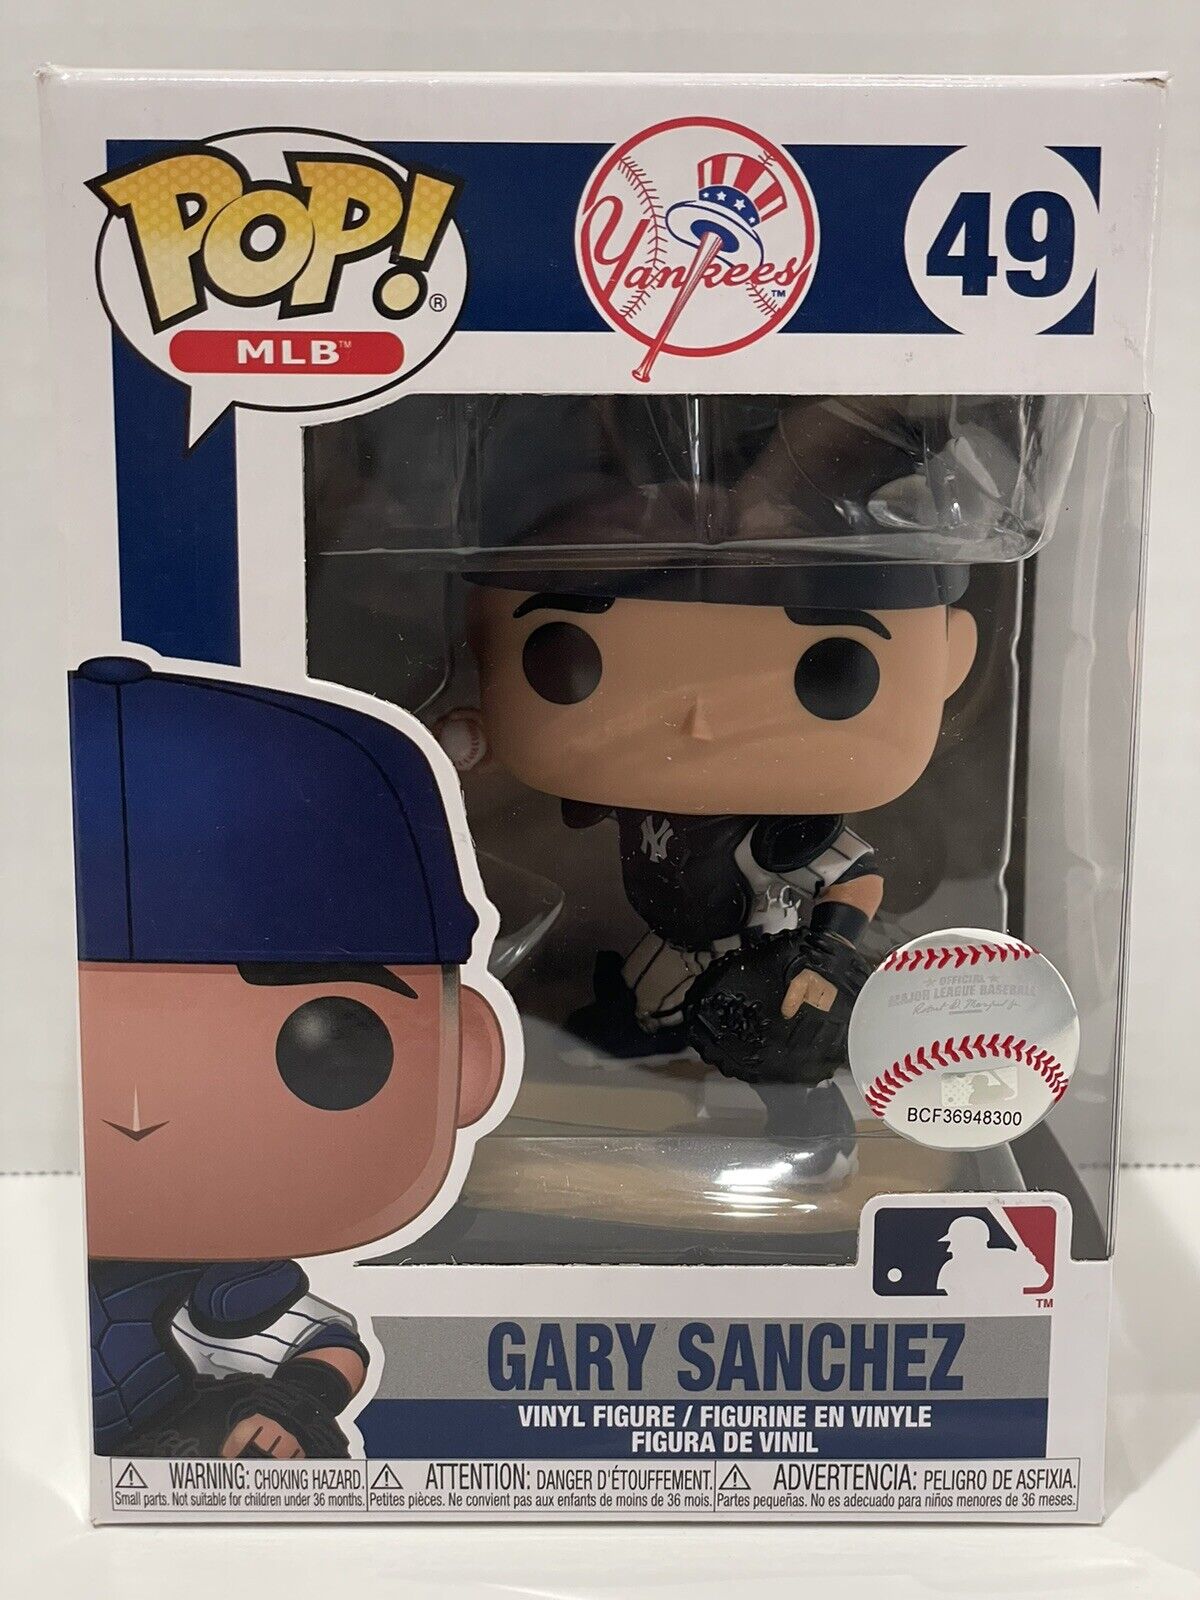 Yankees #49 - Gary Sanchez - Funko Pop MLB